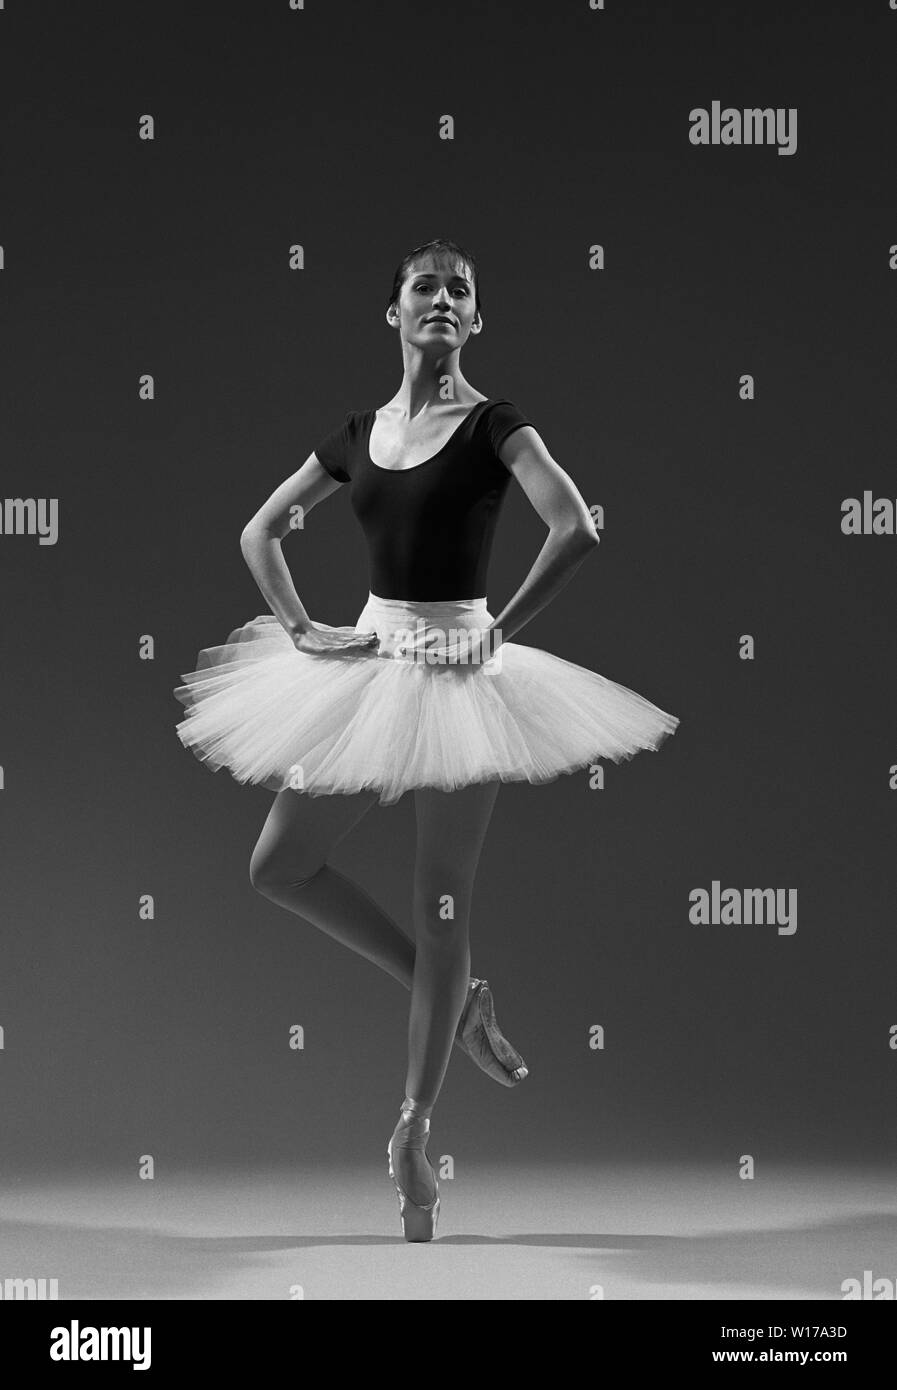 Bailarina de ballet: ¿Qué estándares se requieren a nivel profesional? ☆